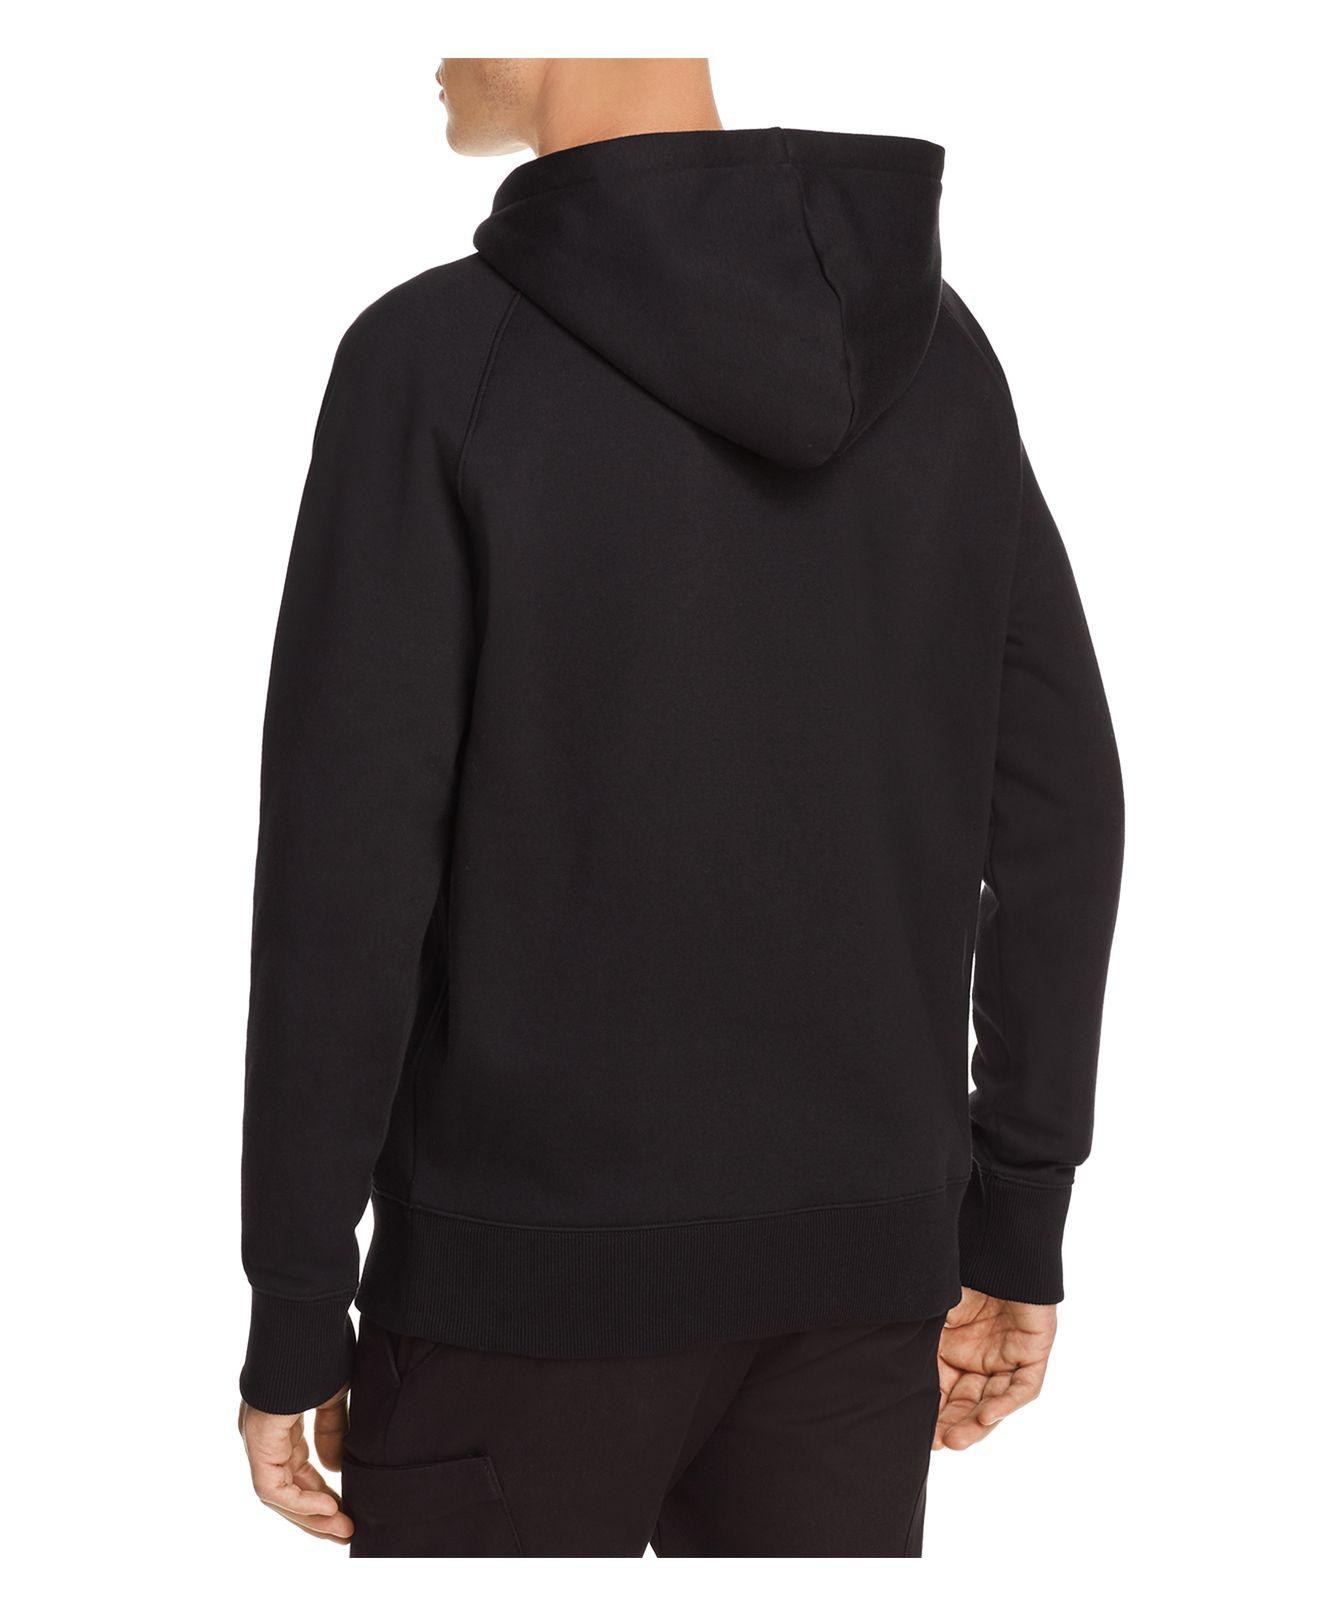 HUGO Backwards Logo Hooded Sweatshirt in Black for Men - Lyst